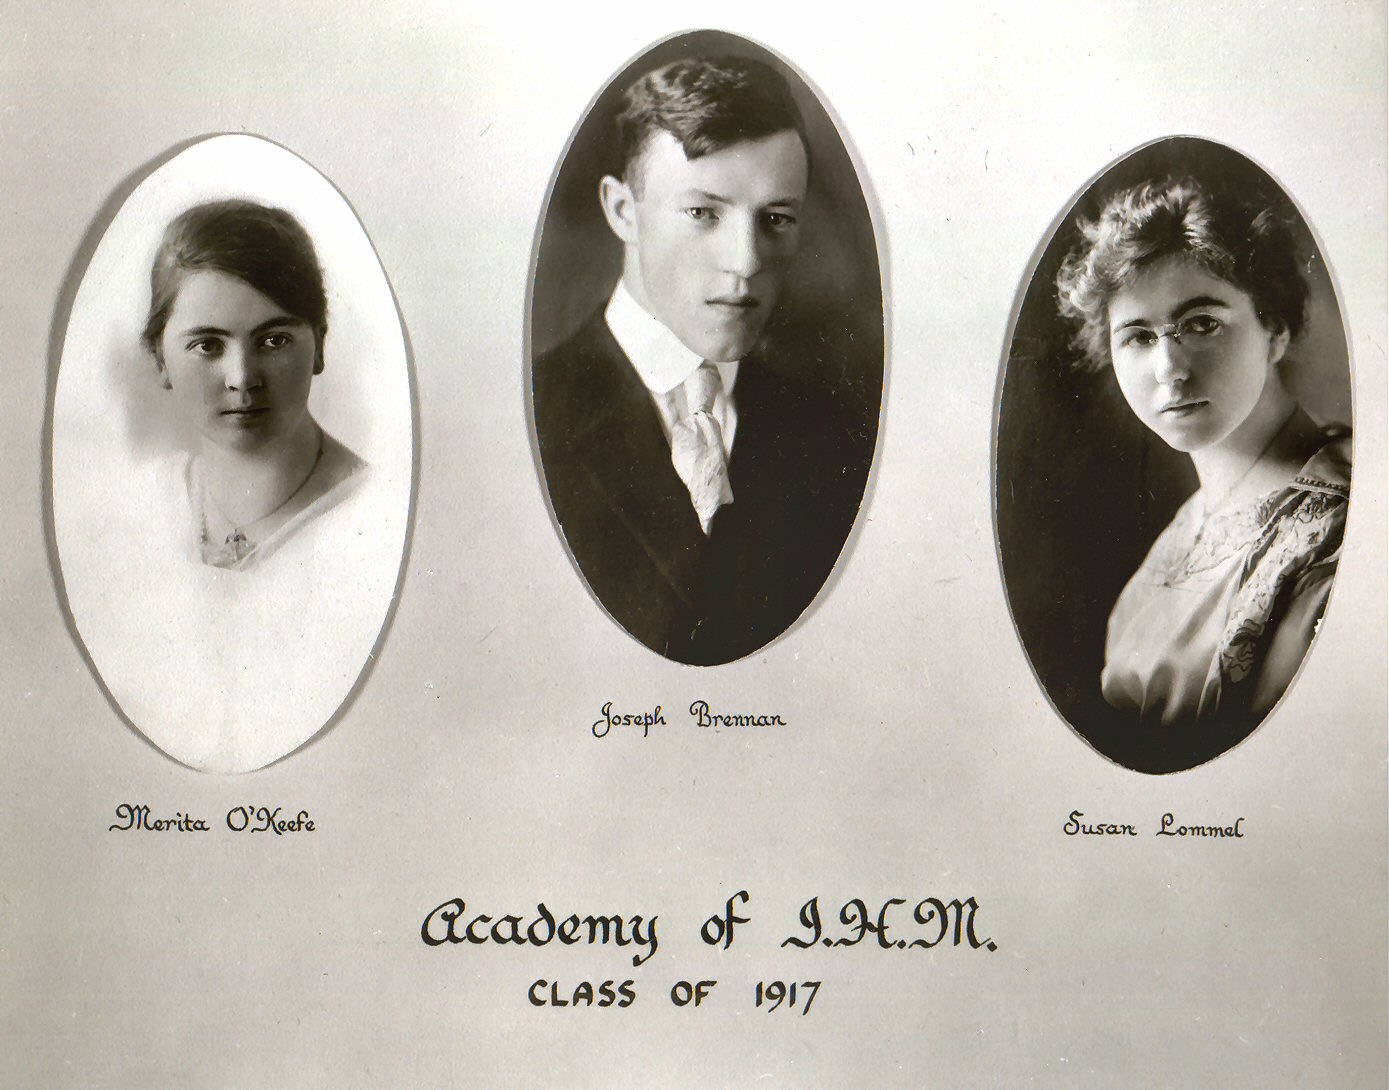 class of 1917